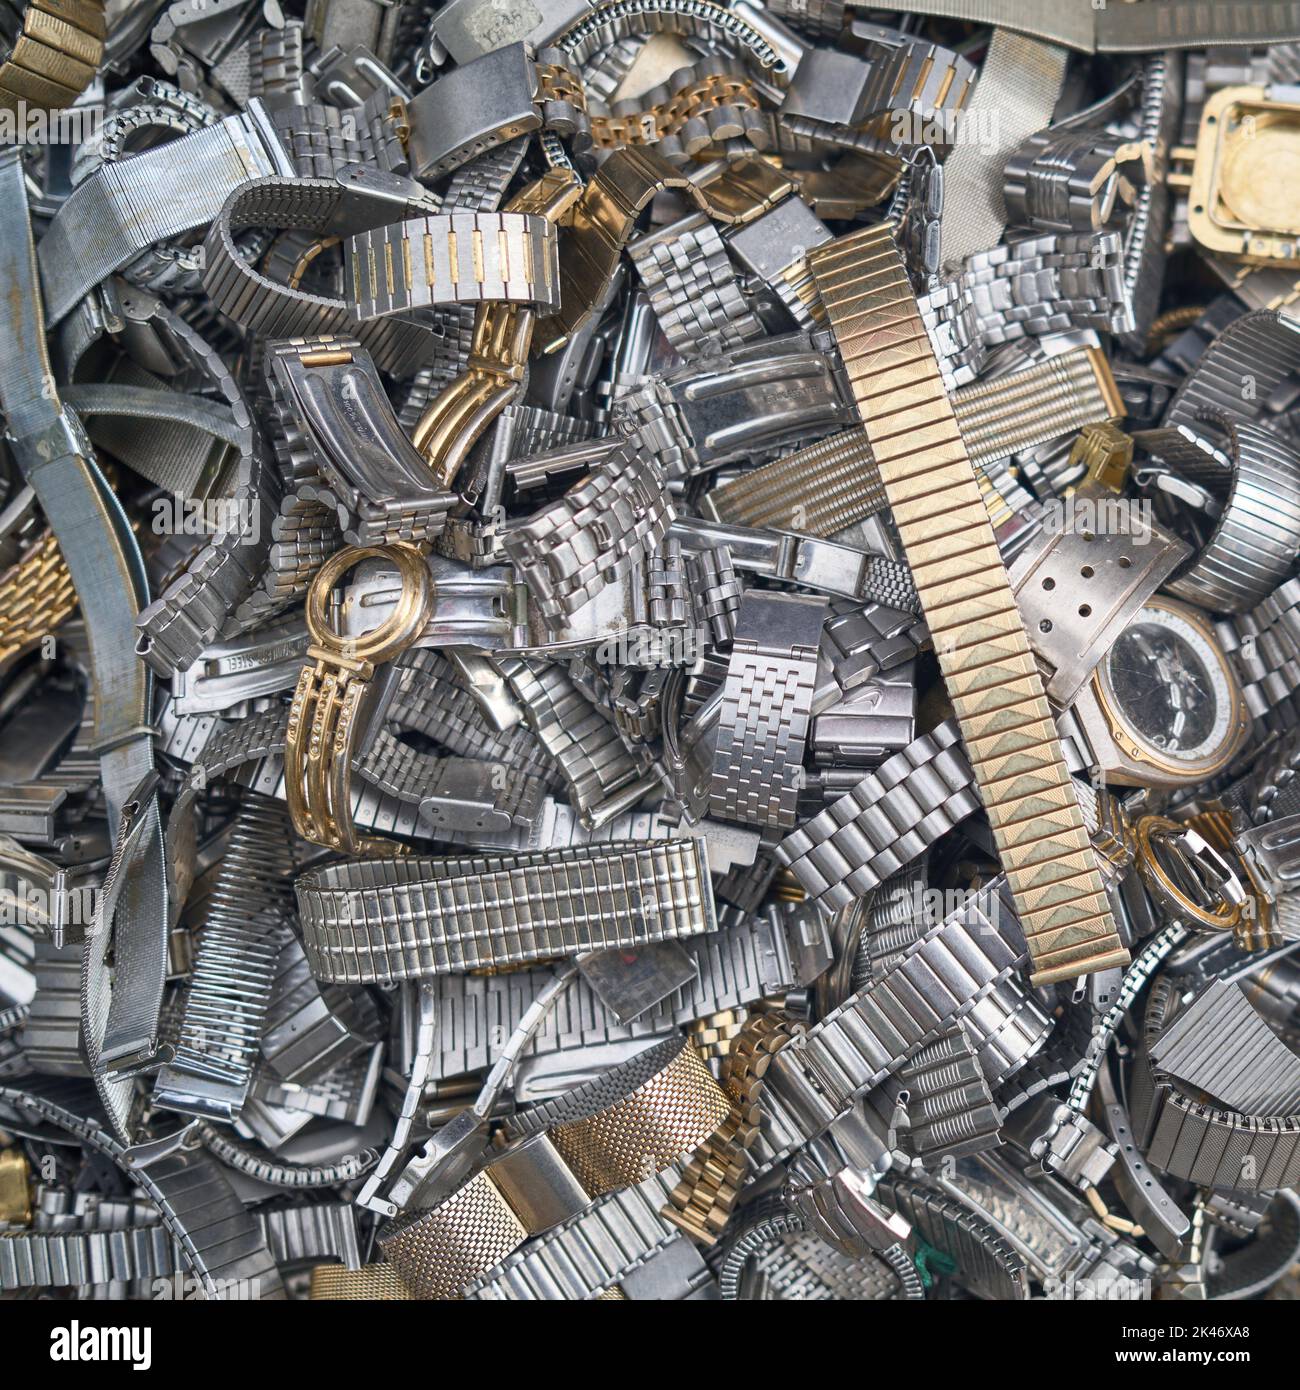 Vari cinturini e braccialetti in metallo per orologi (n. 6) Foto Stock